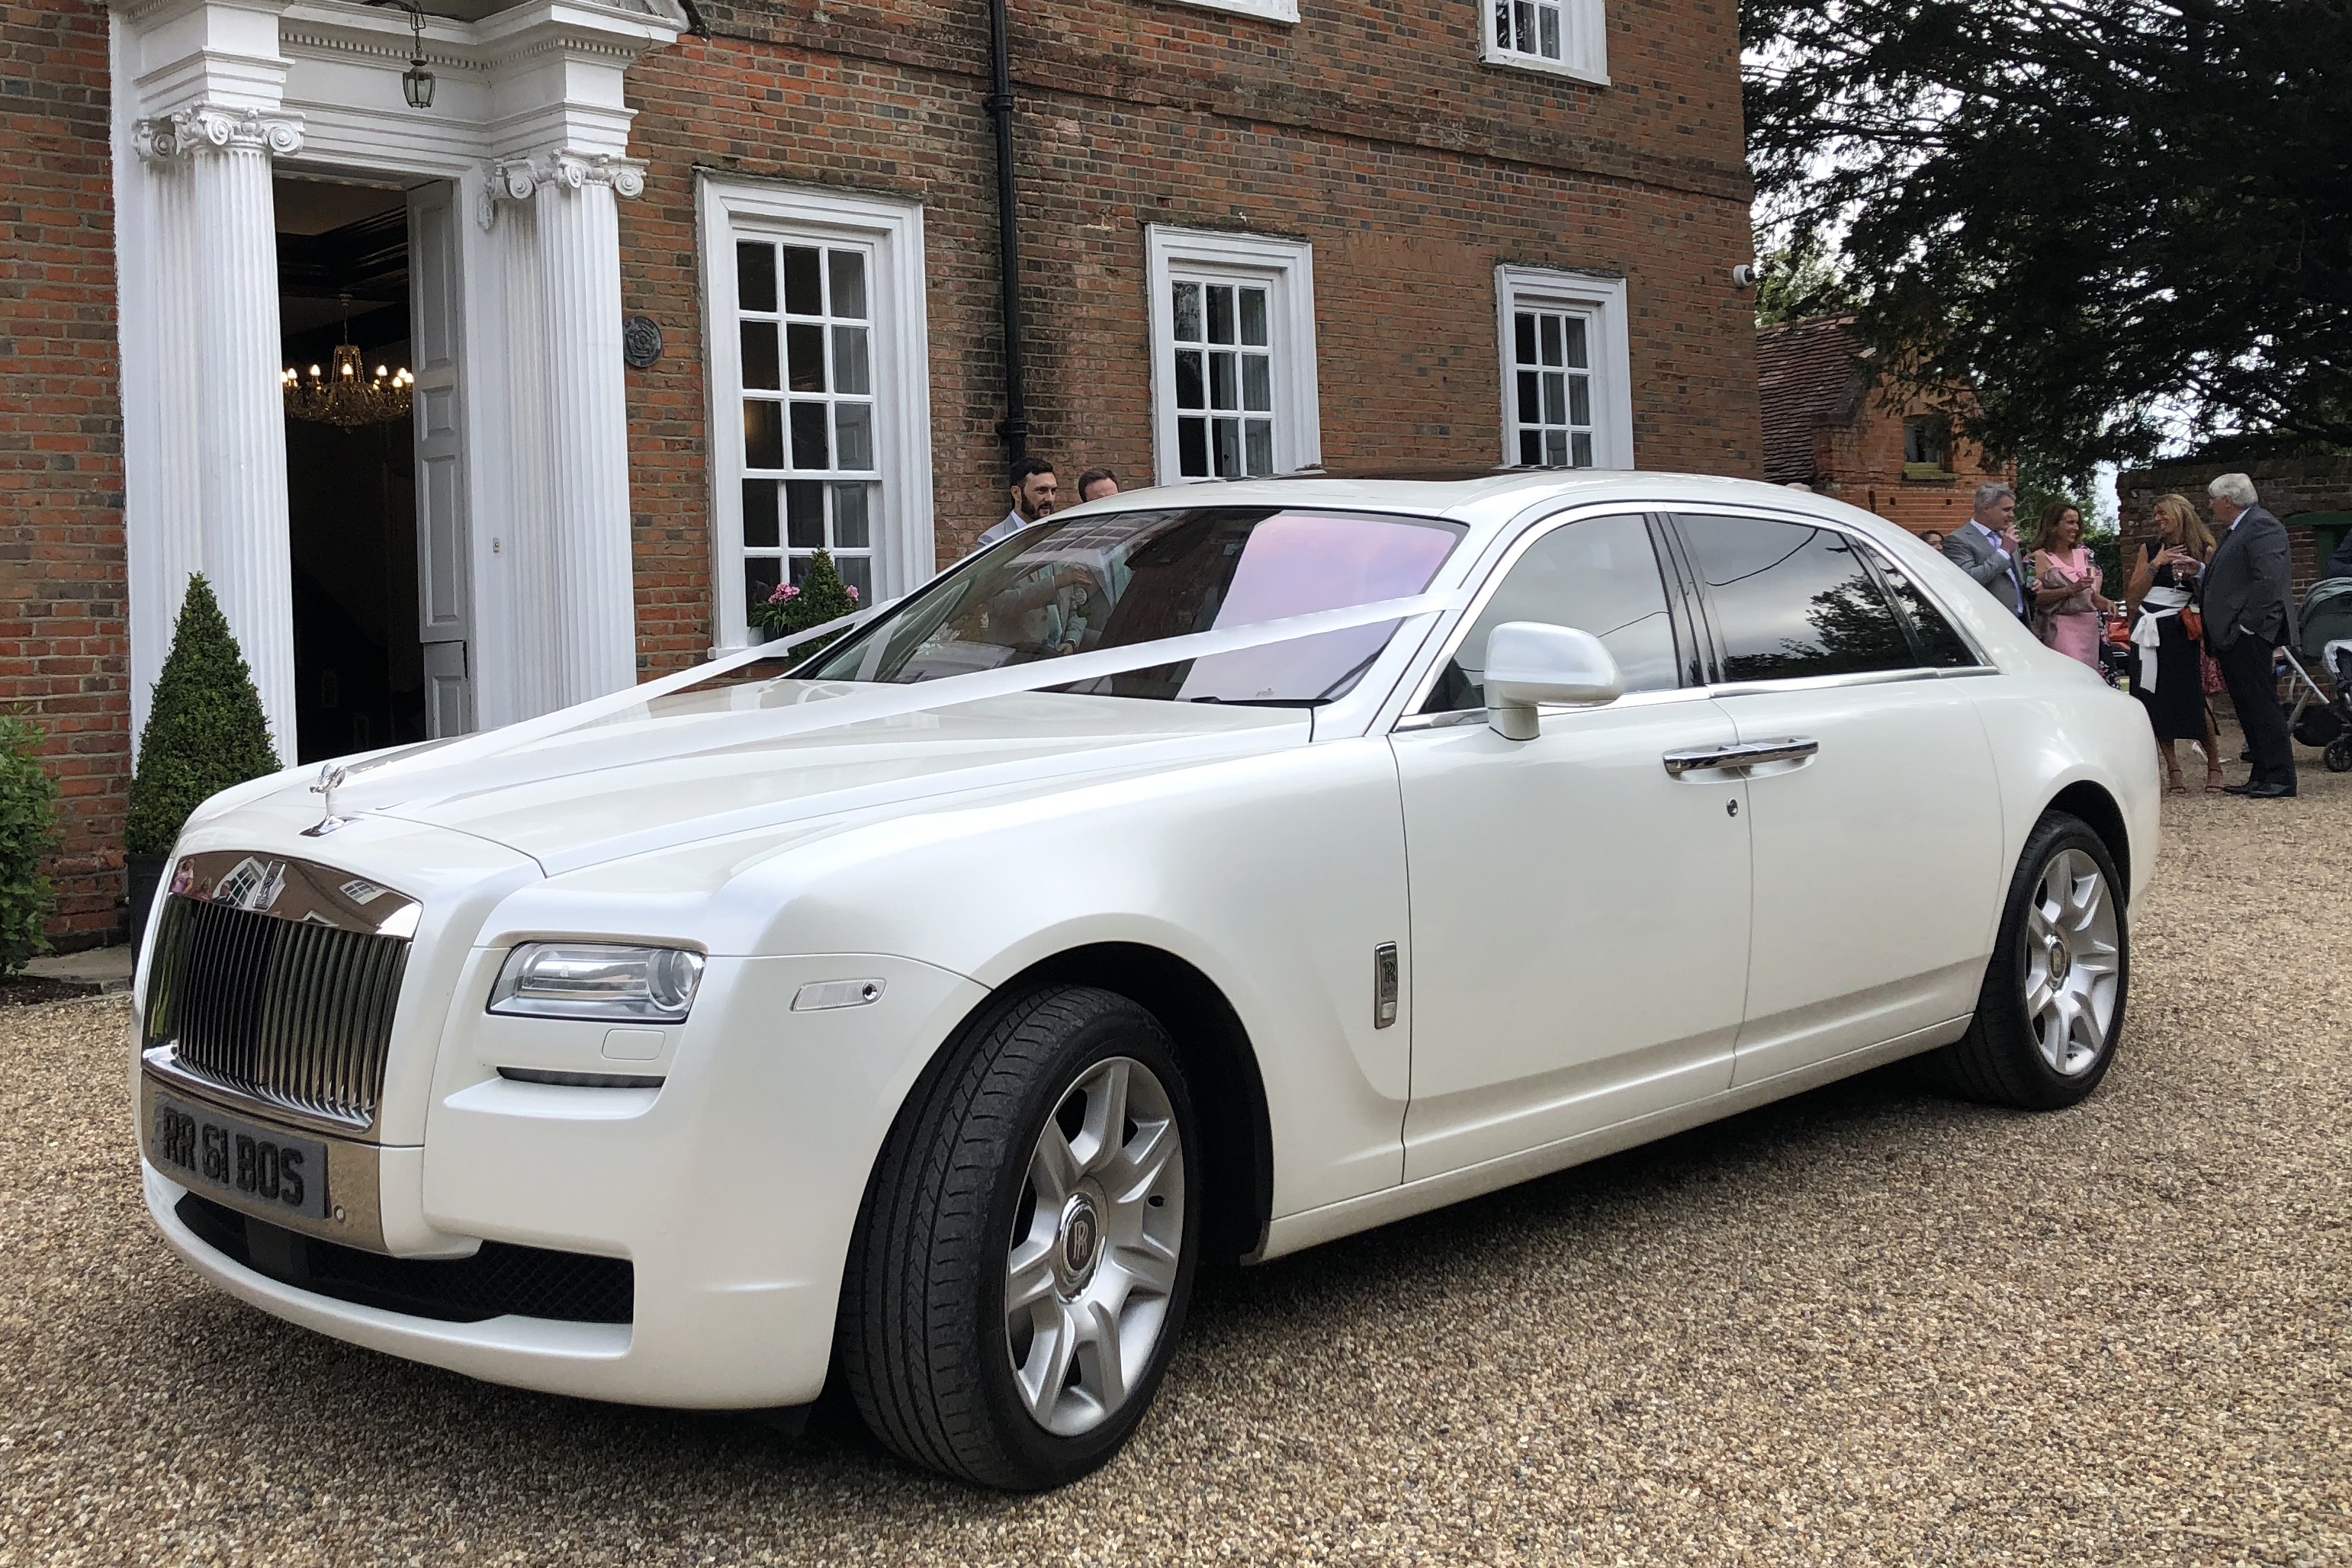 Rolls-Royce Ghost wedding car for hire in West London